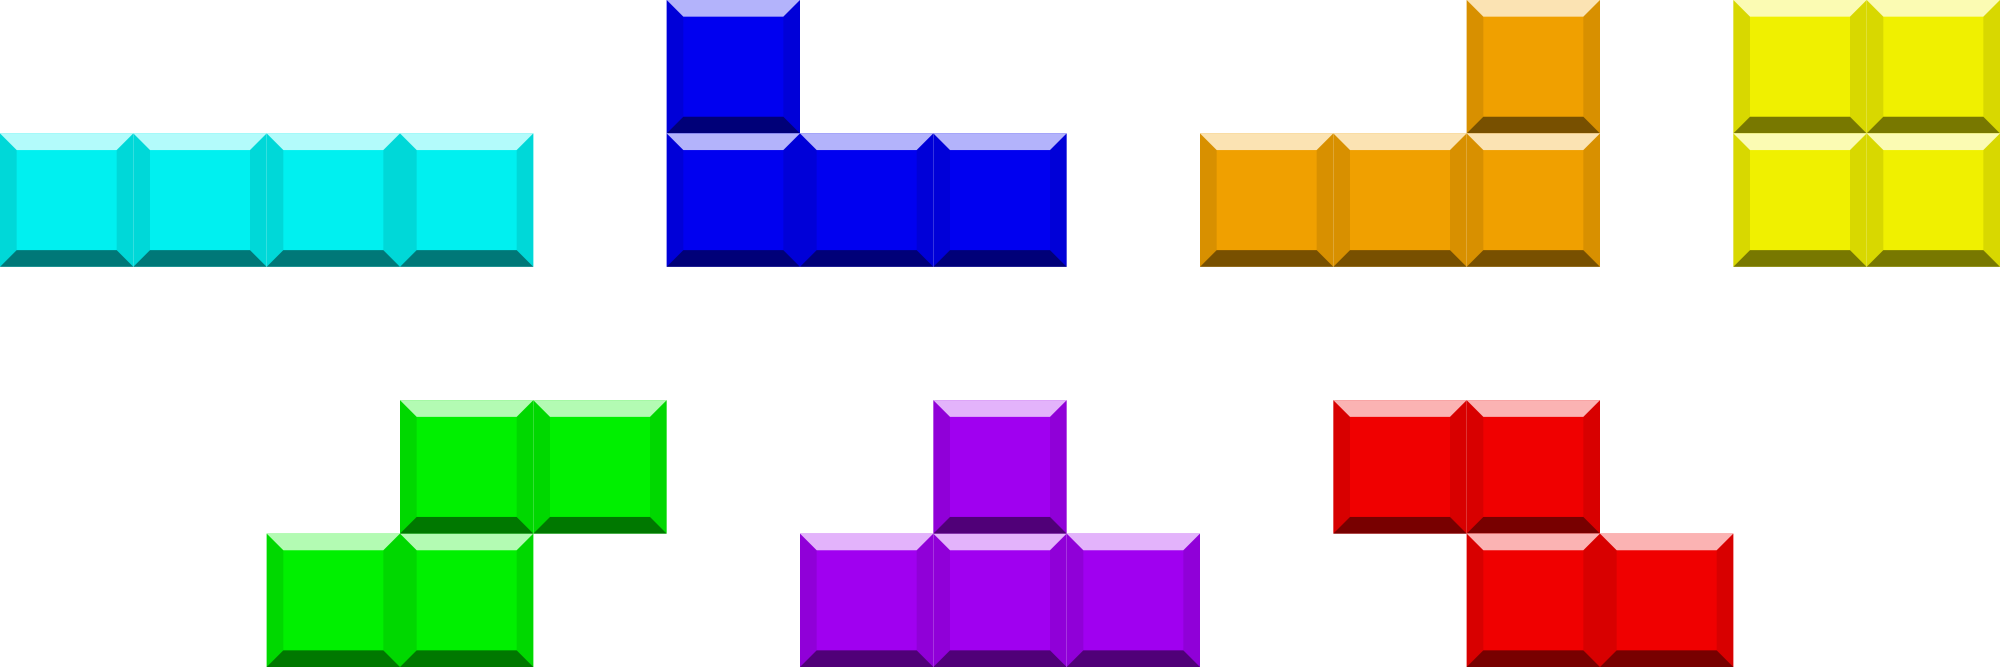 Tetris Games Solitaire PNG